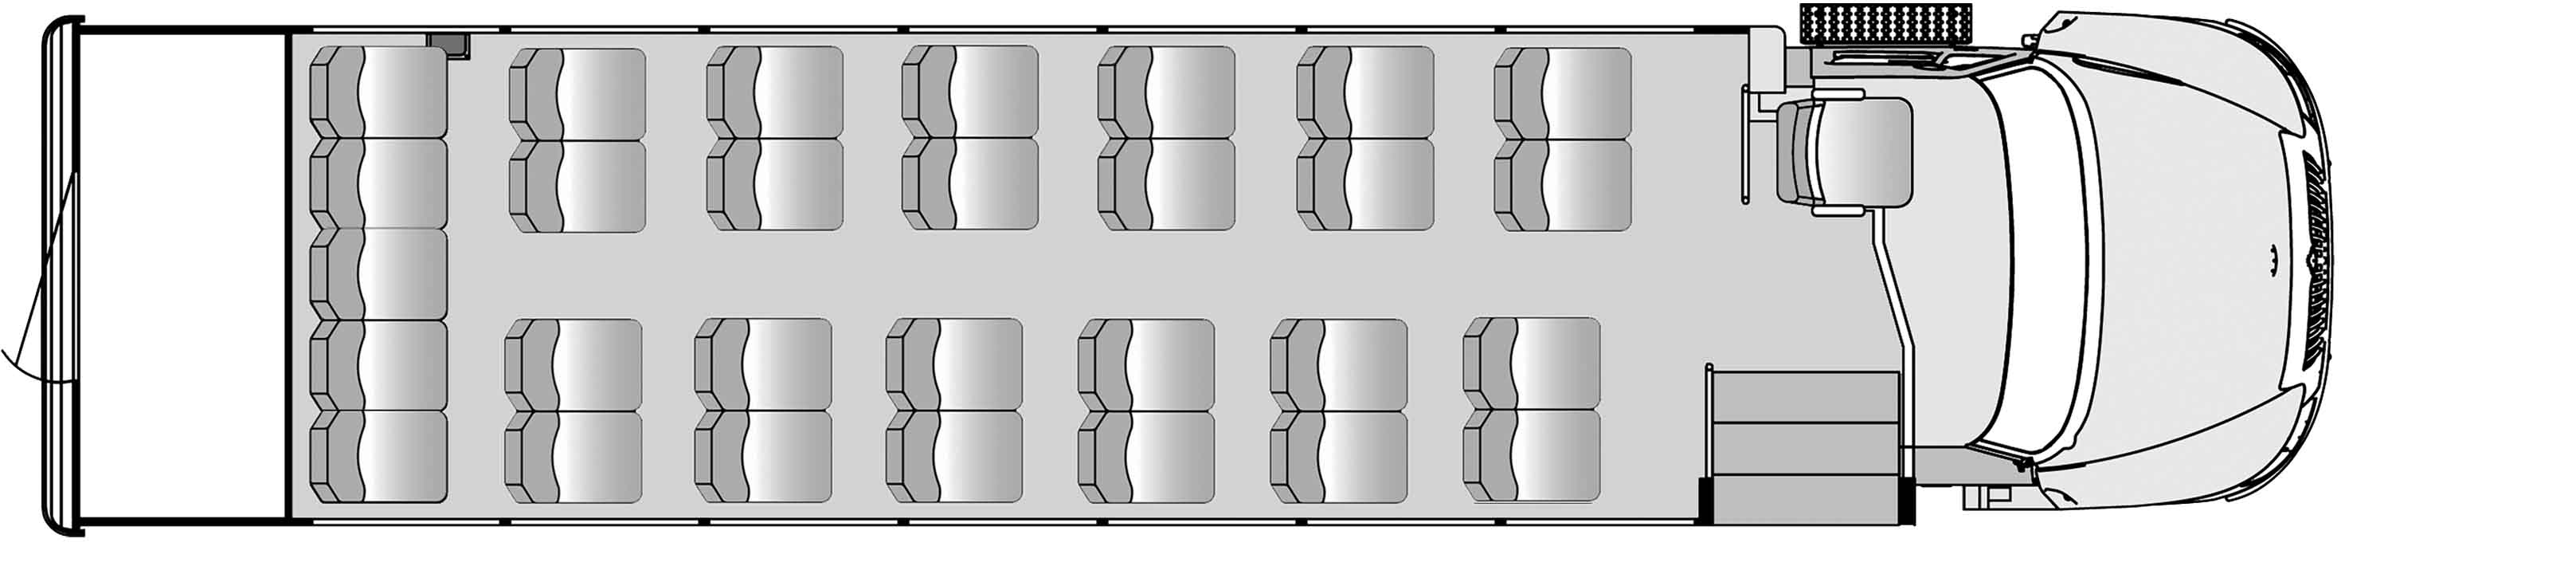 29 Passenger With Rear Luggage Plus Driver Floorplan Image